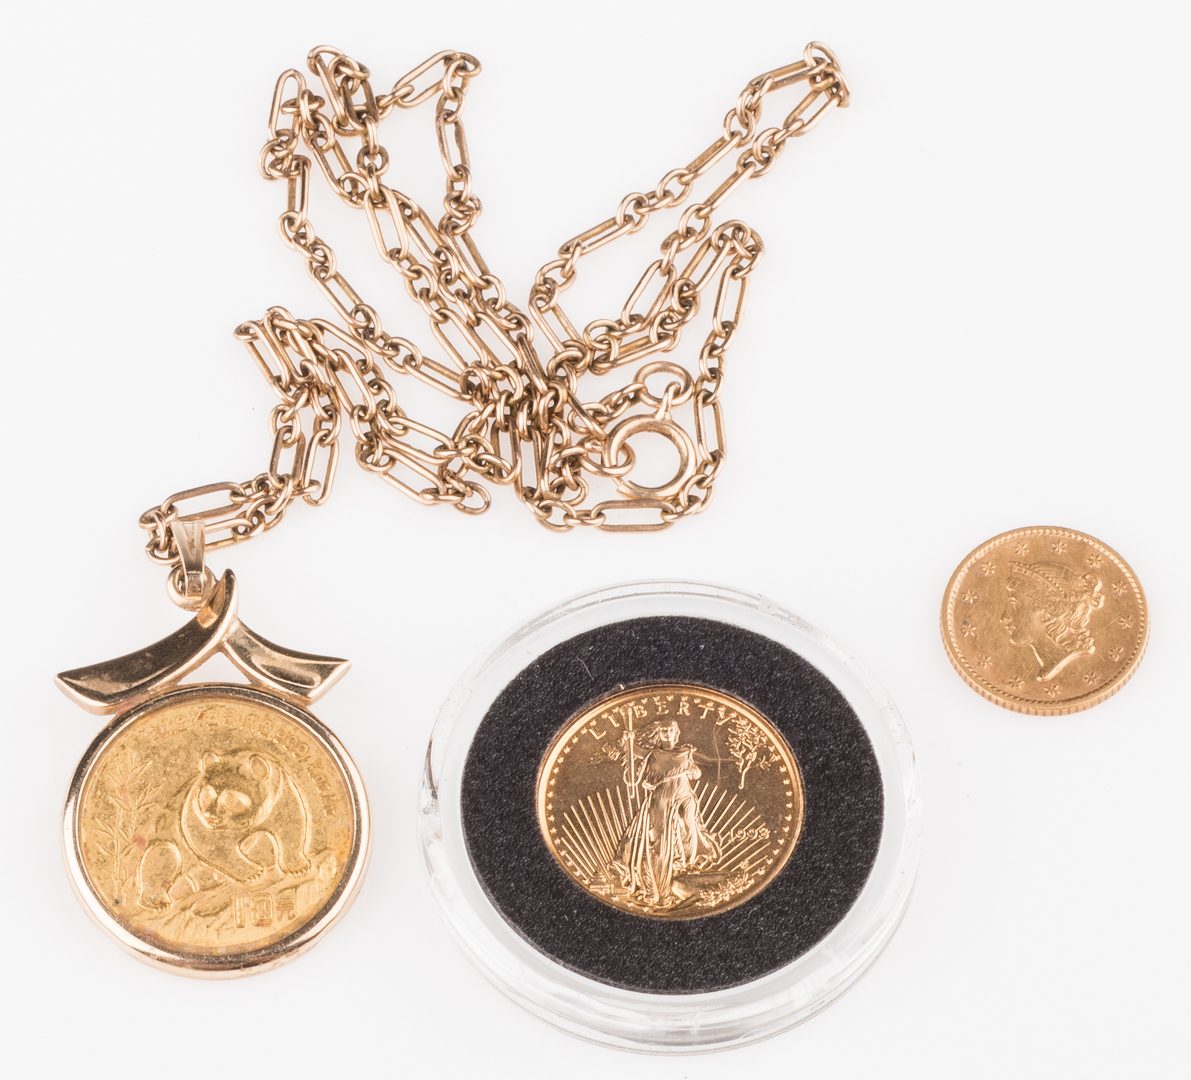 Lot 892: Lot of 3 Gold Coins, inc. 1853 $1 US Liberty Head